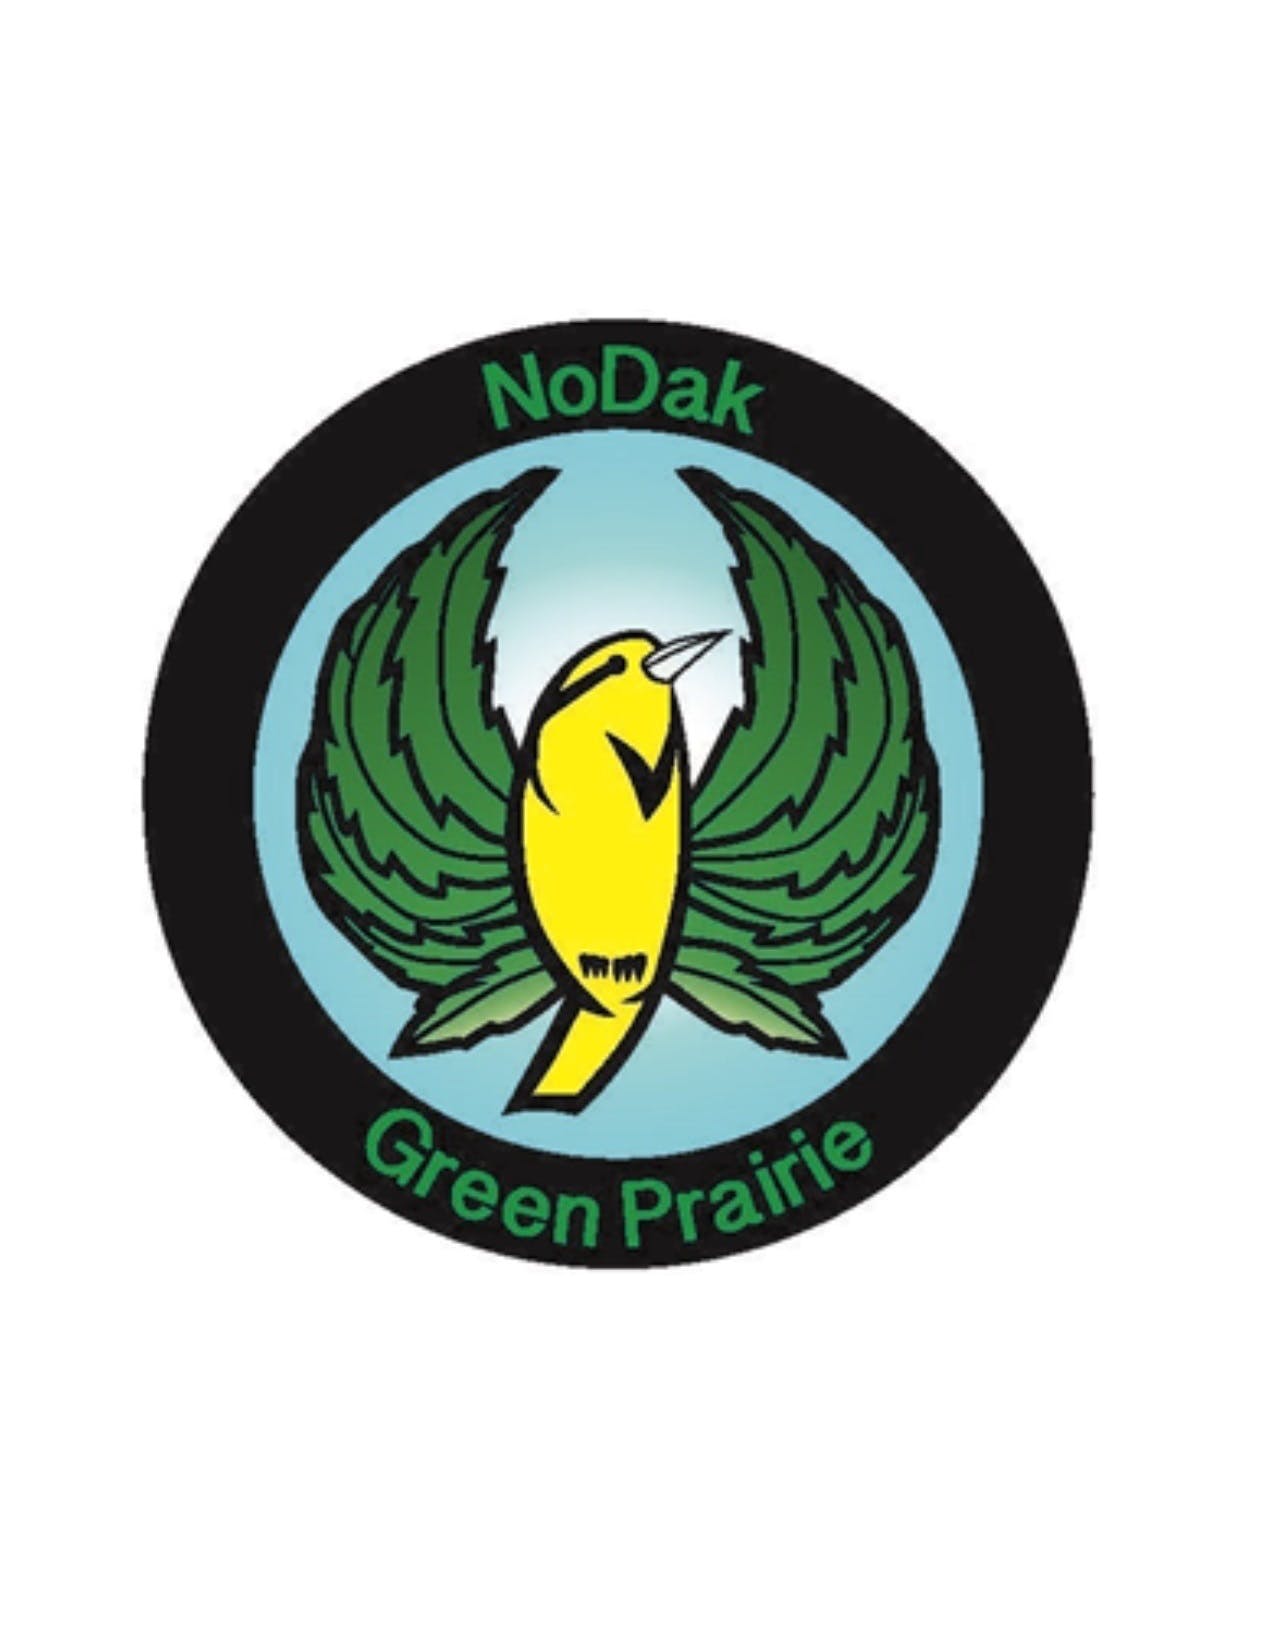 NoDak Green Prairie - Medical Marijuana Doctors - Cannabizme.com